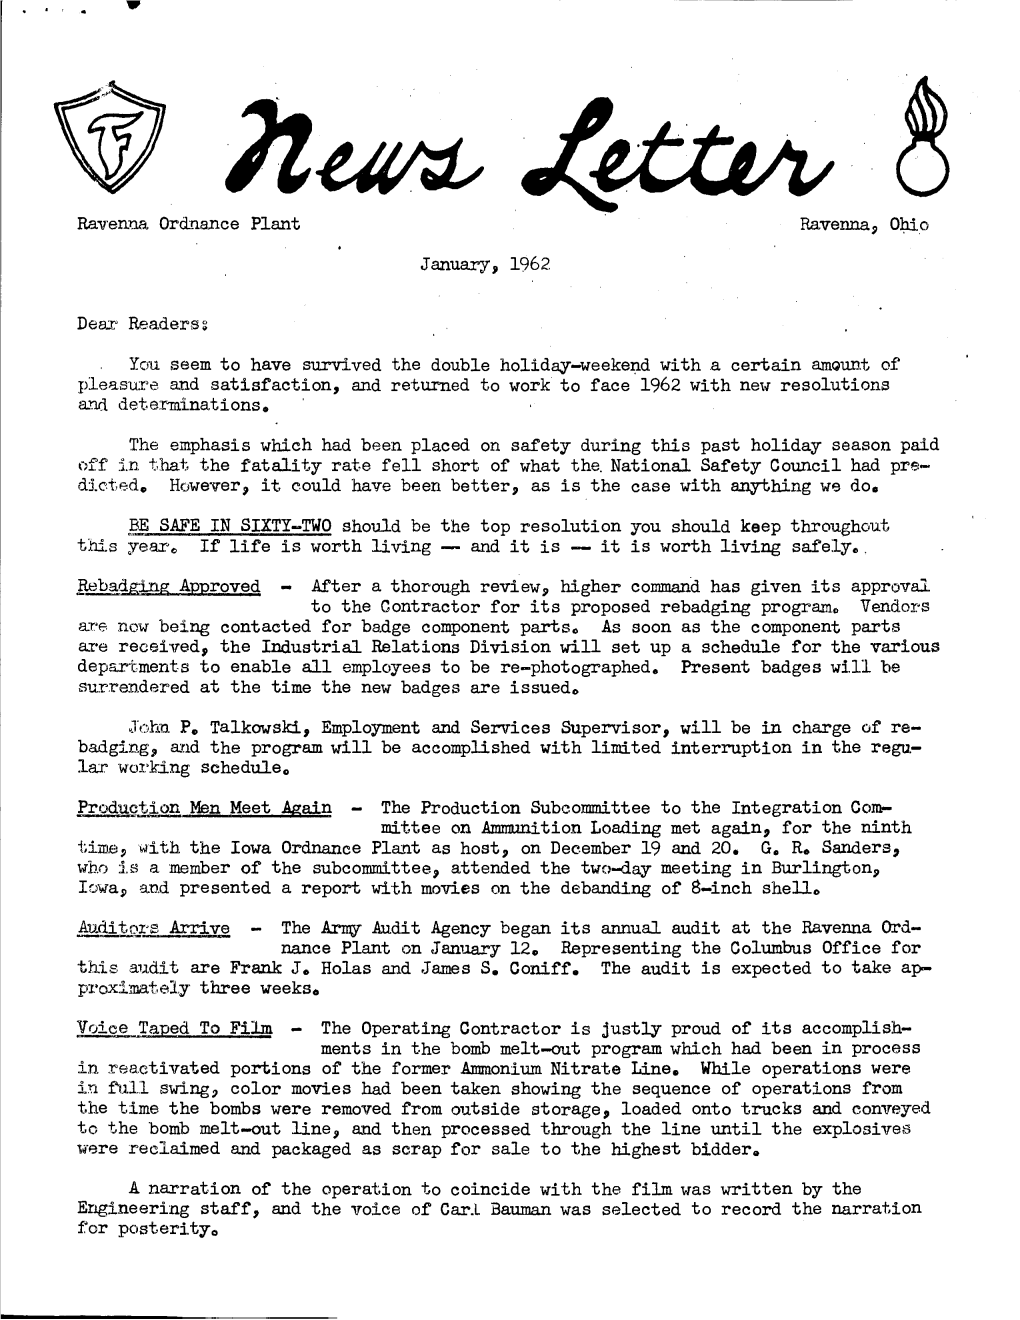 Ravenna Arsenal News Letter for CY 1962